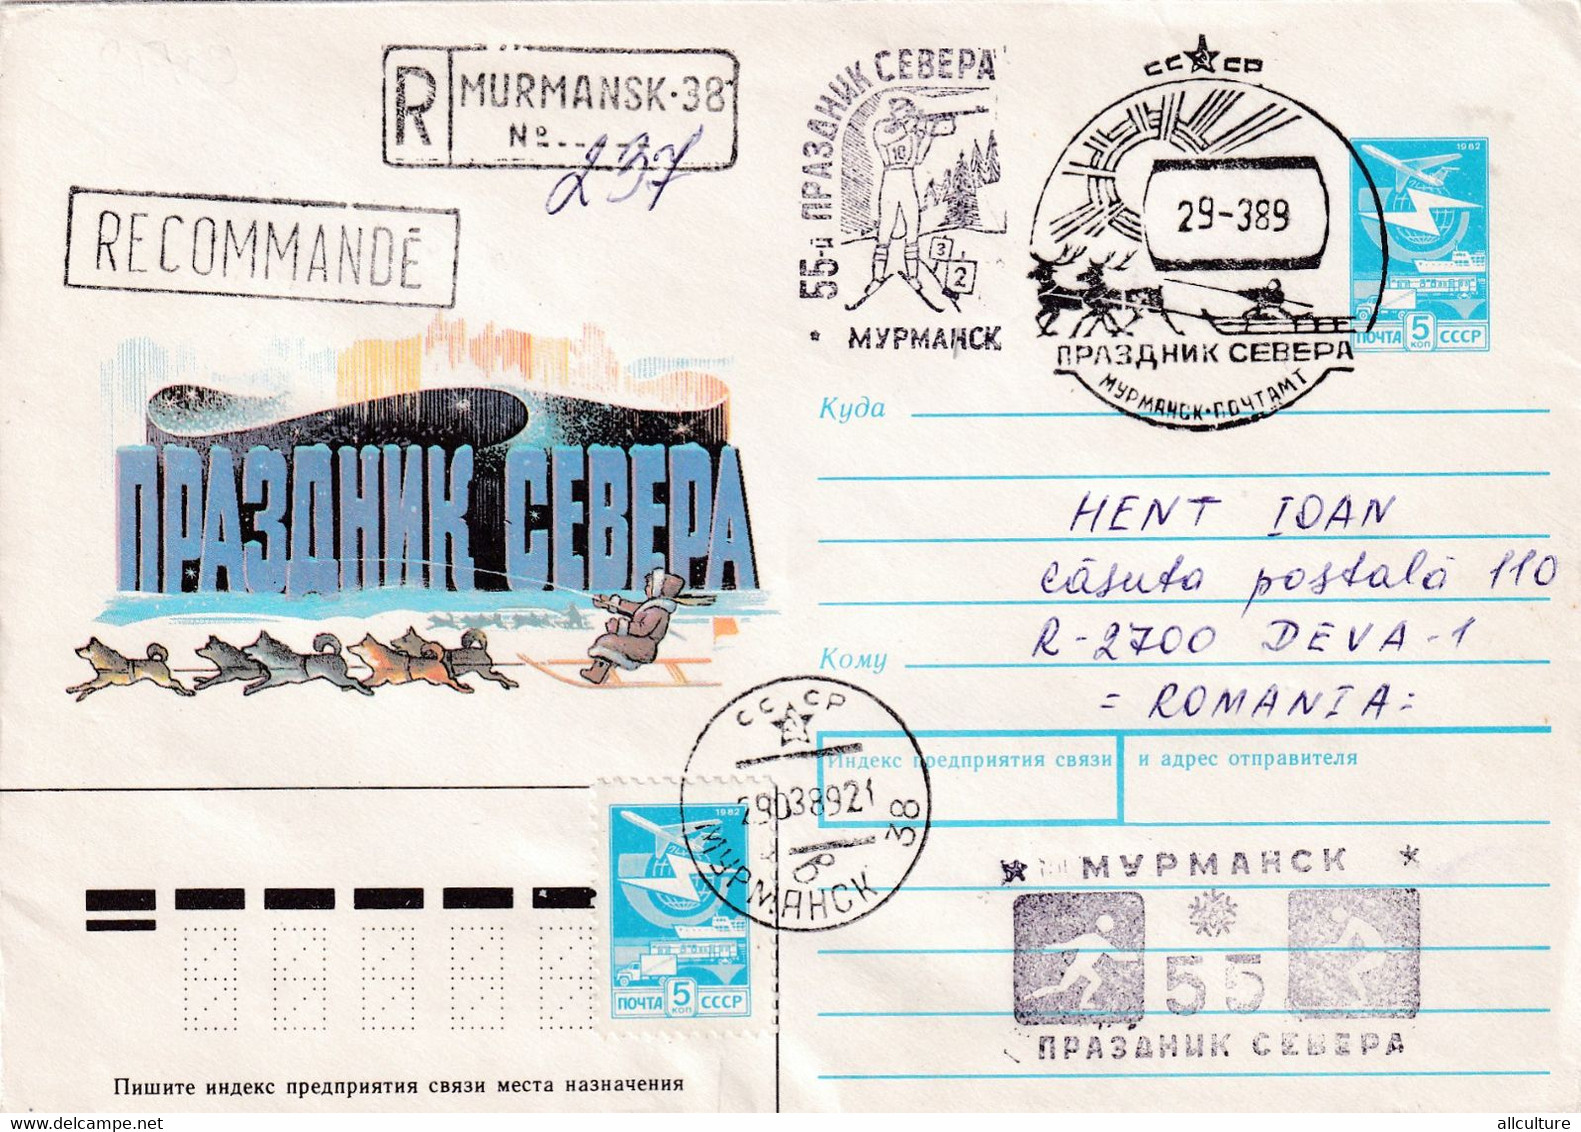 A8152- REGISTRED LETTER MURMANSK, HOLIDAY OF THE NORTH, 1989 USSR POSTAL STATIONERY SENT TO DEVA ROMANIA - Événements & Commémorations